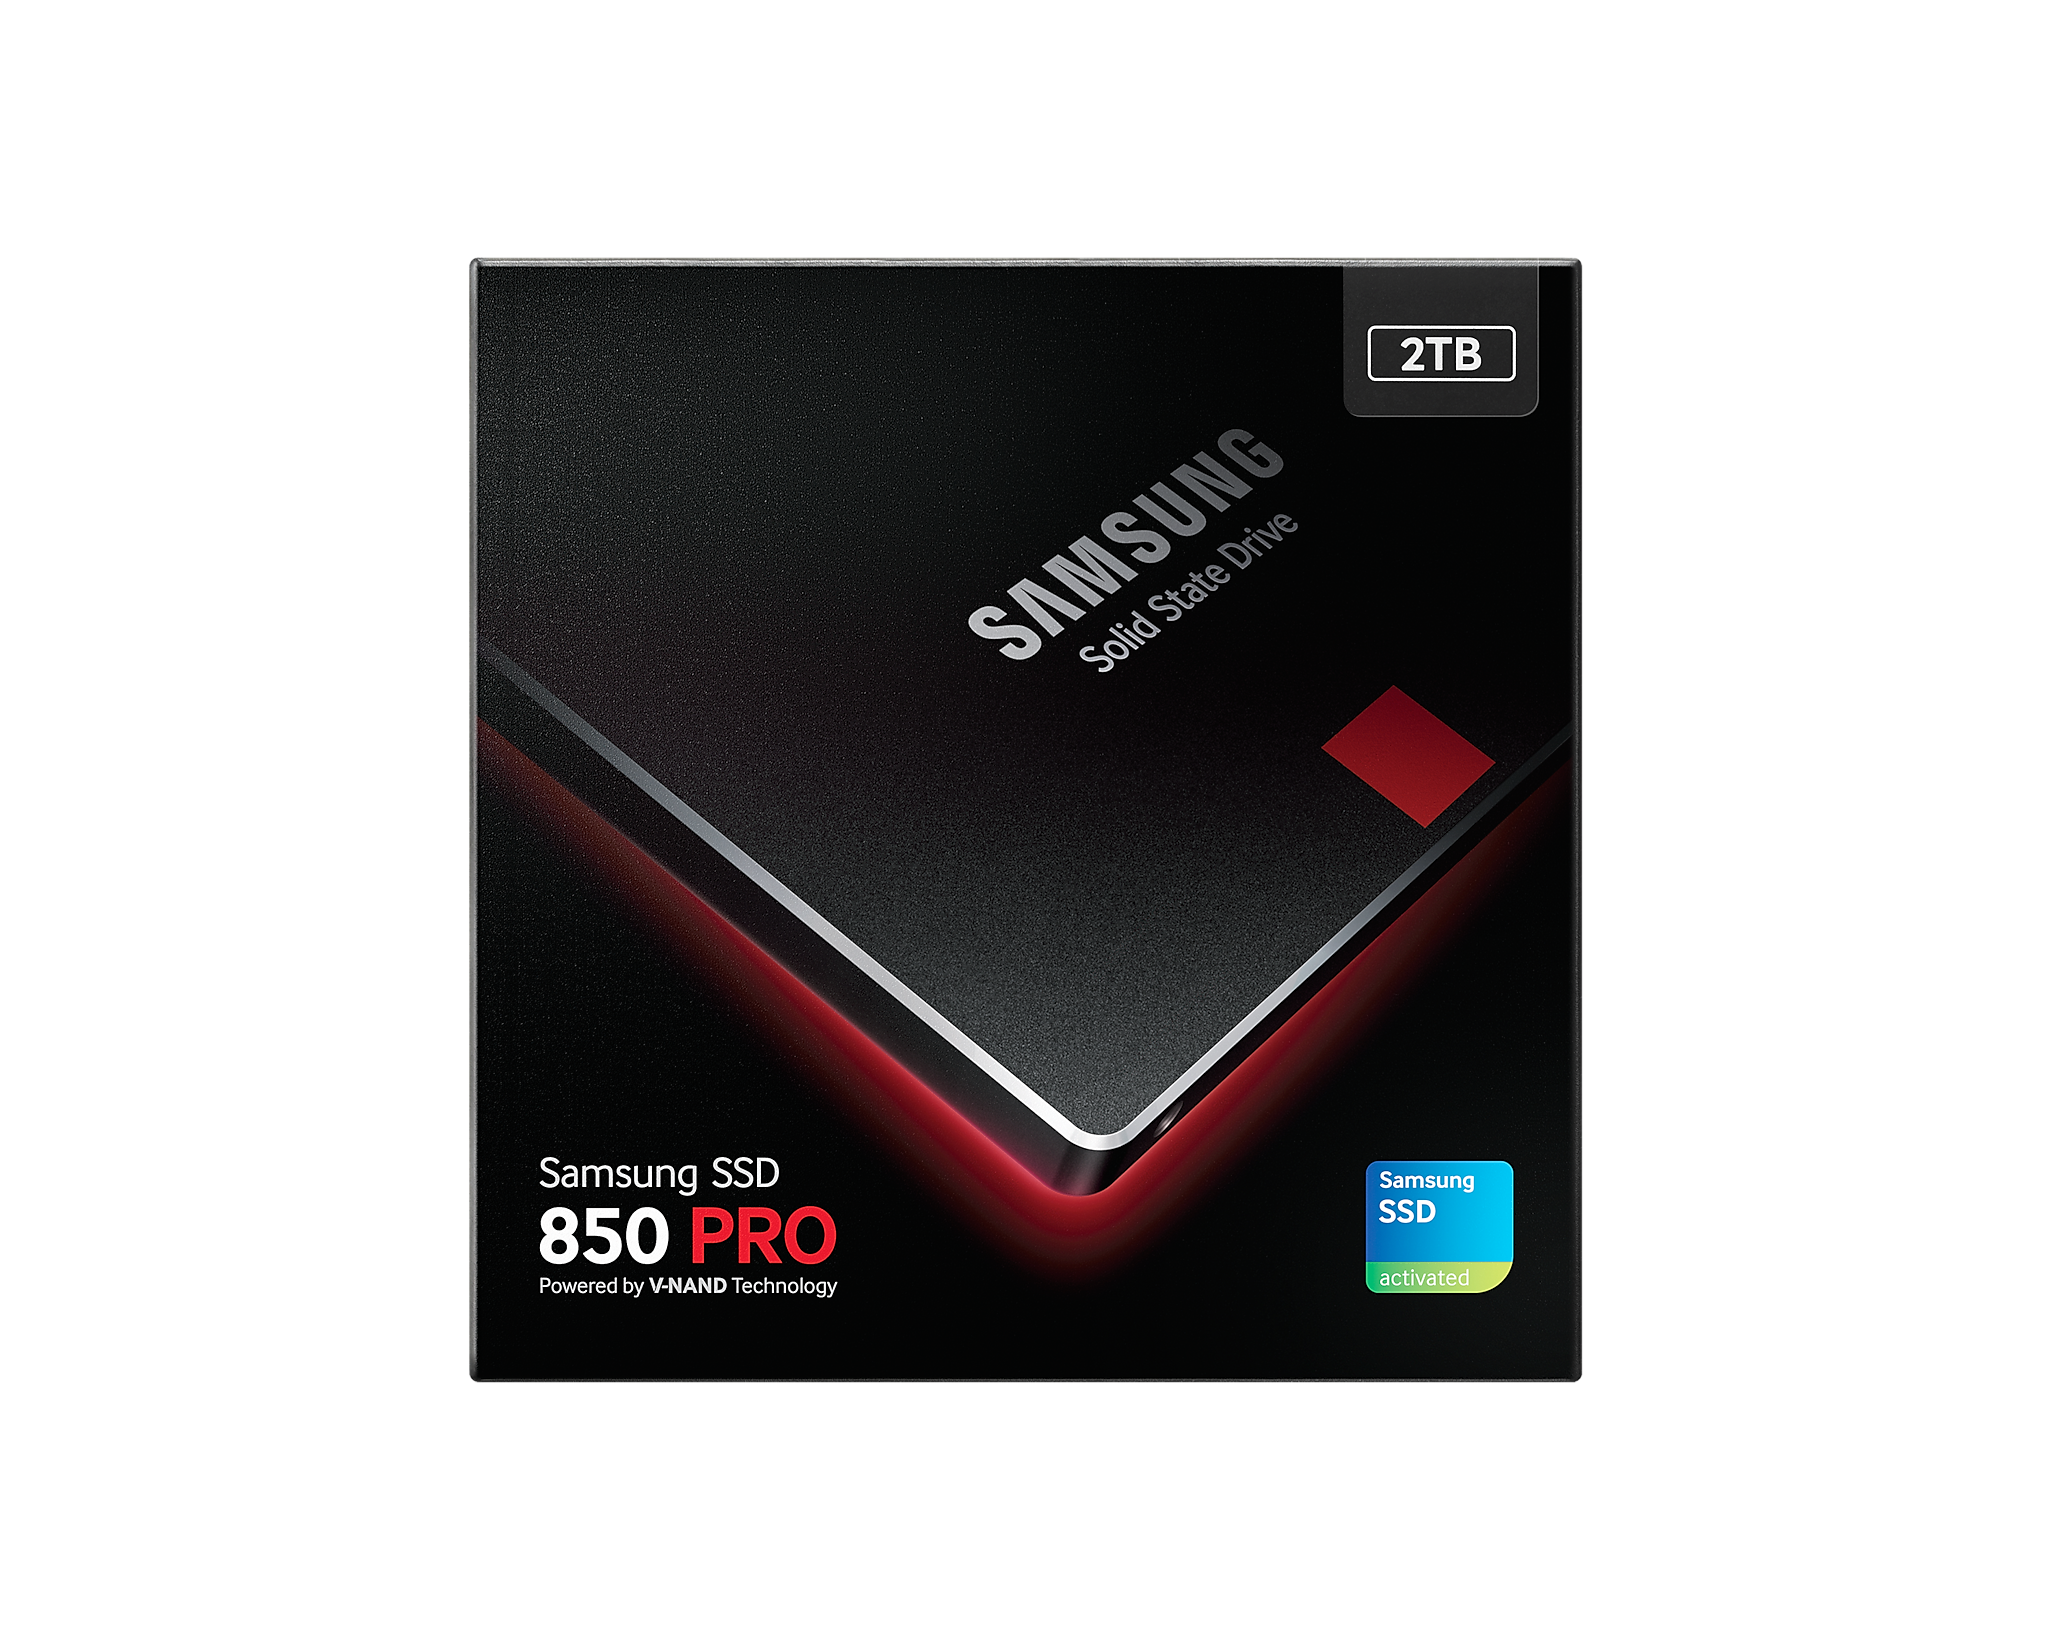 Samsung pro 2tb купить. Samsung 850 Pro 2tb. SSD Samsung 2 TB. SSD накопитель Samsung. Самсунг ссд на 2 ТБ.